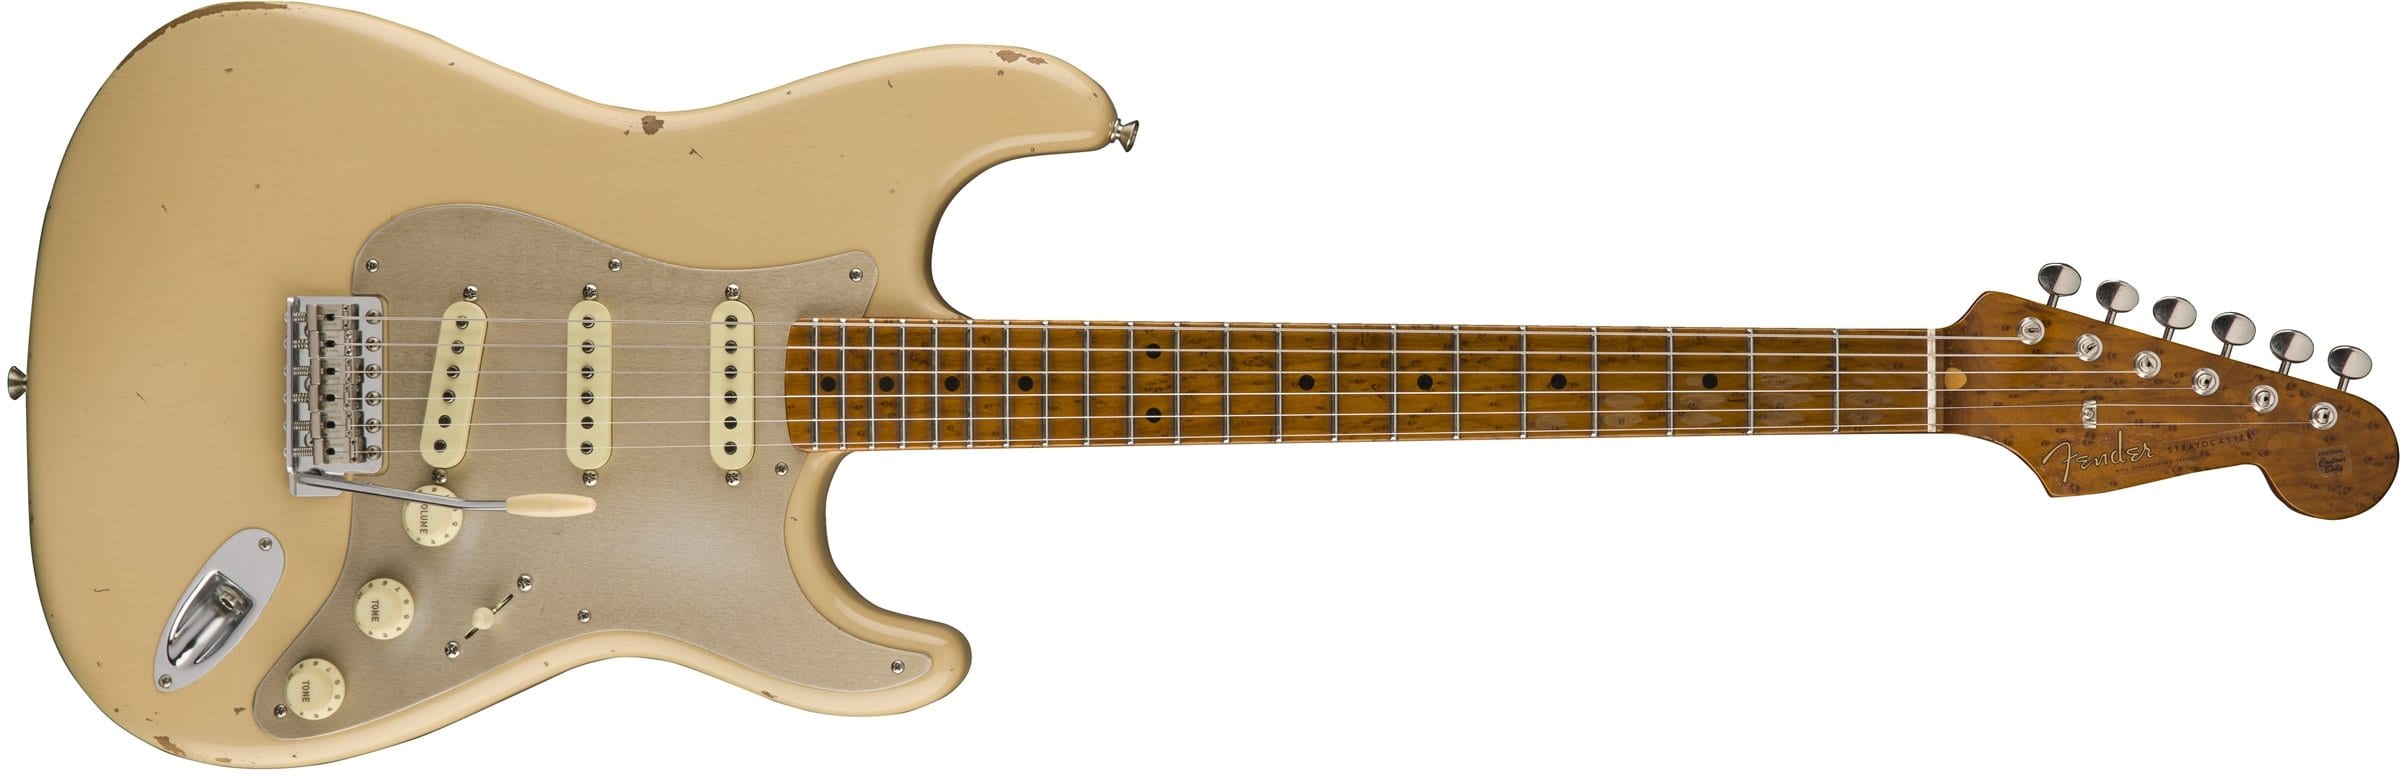 Fender 2017 Limited Edition ’56 Roasted Strat Journeyman Relic